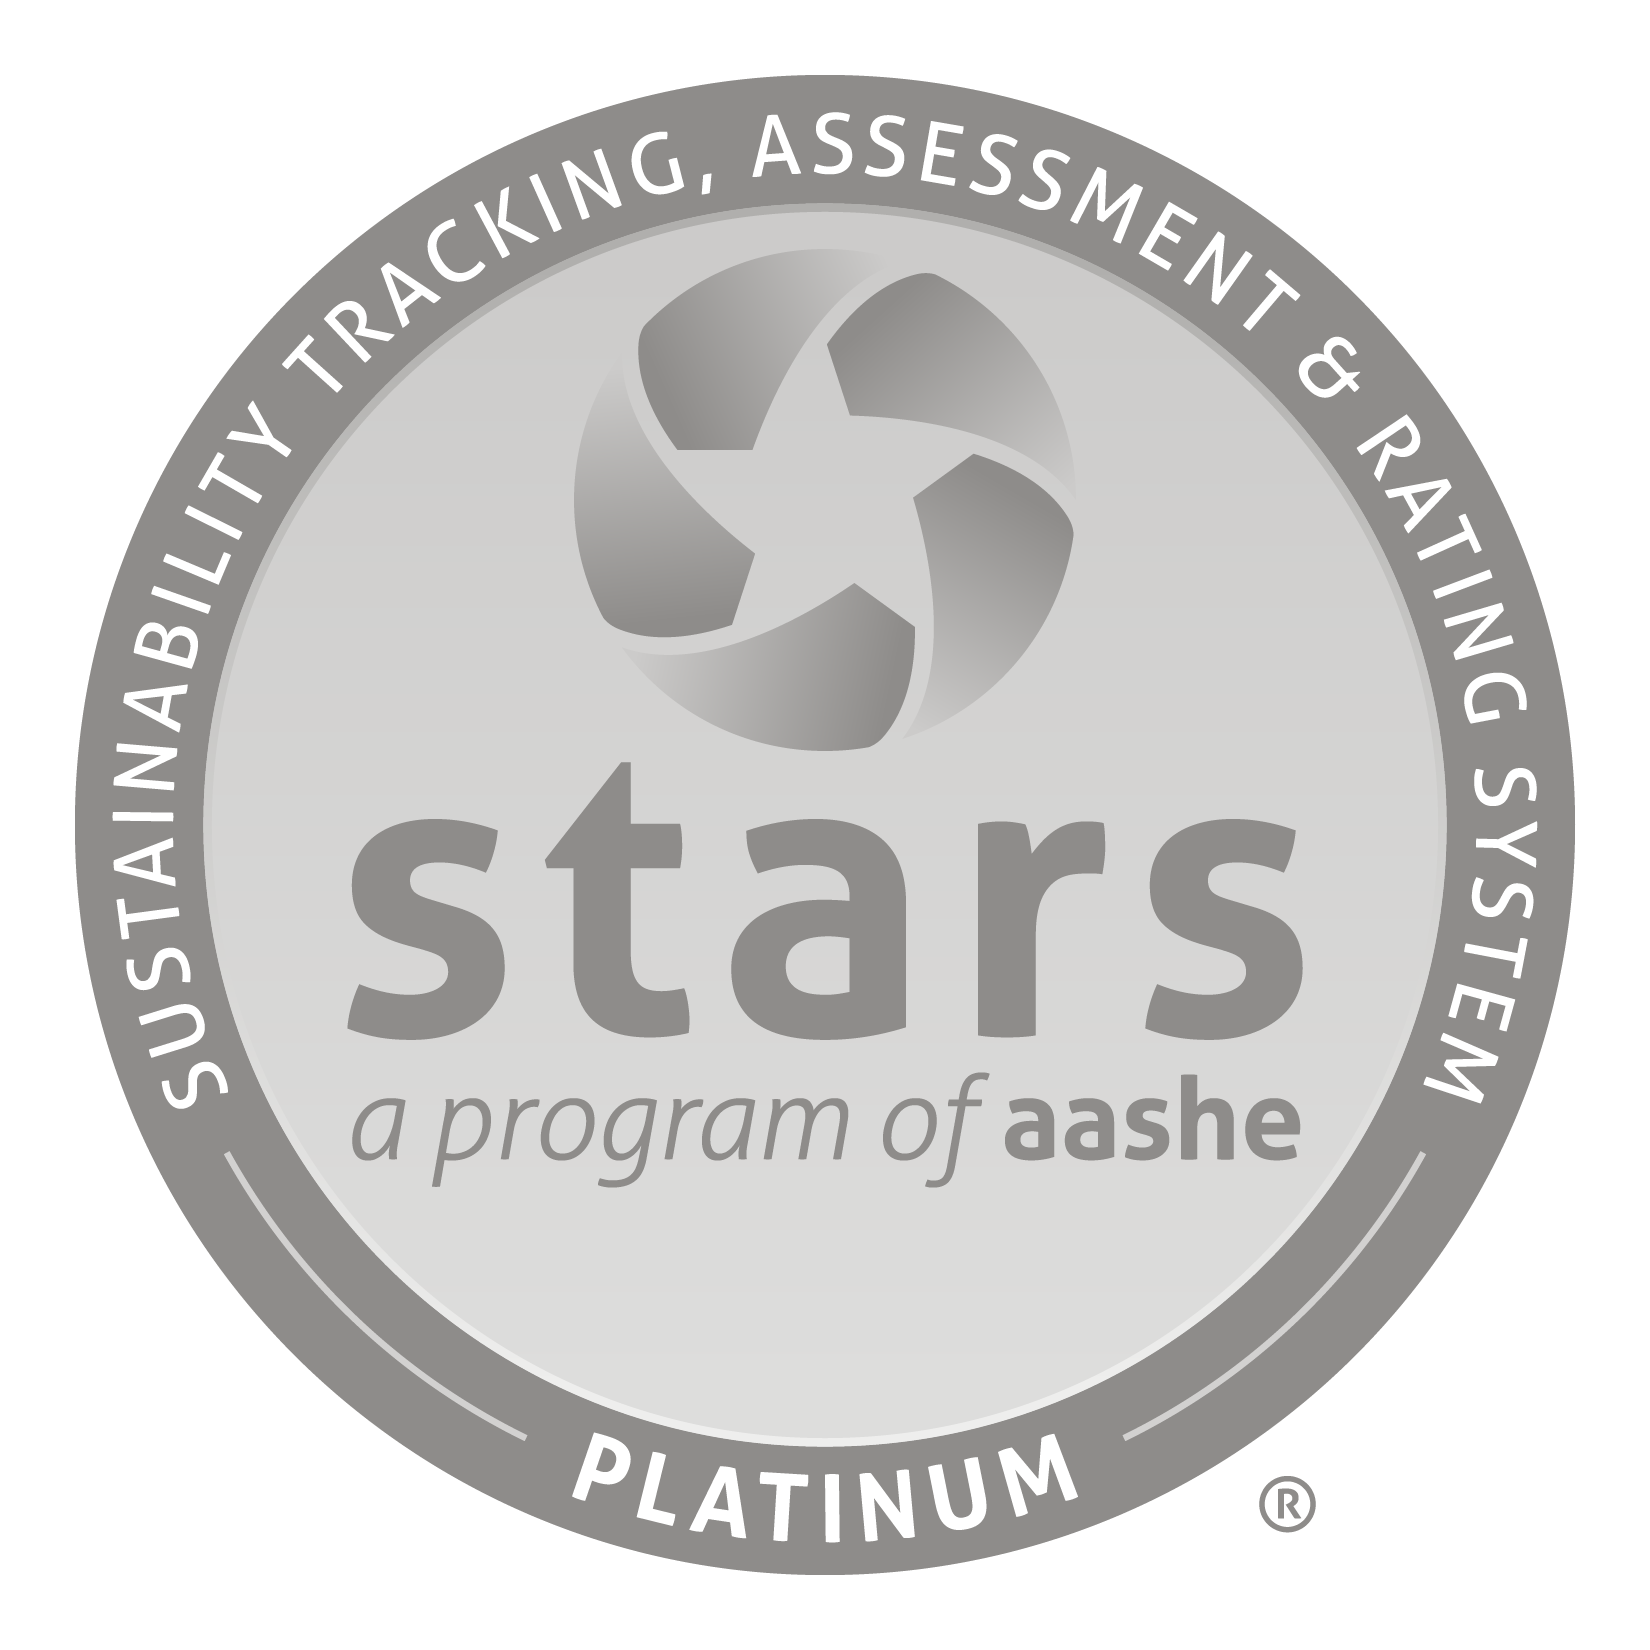 Platinum logo seal